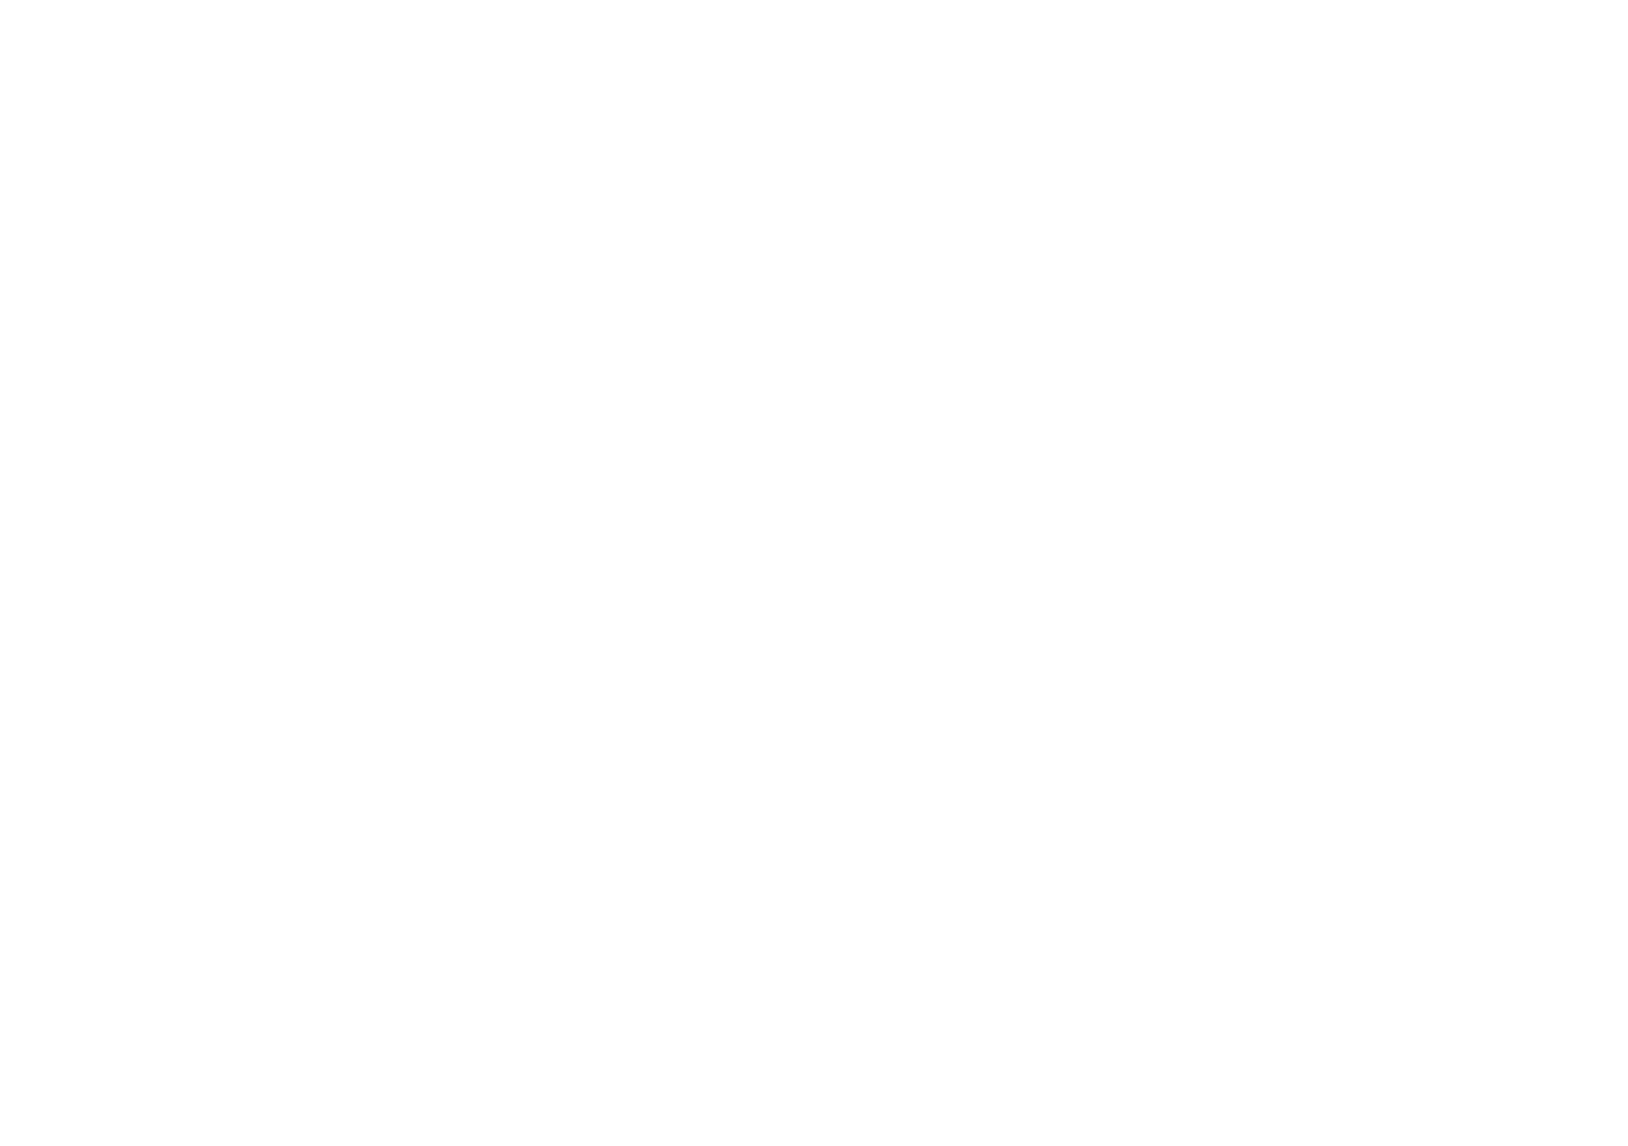 Pocono Lodge No. 780